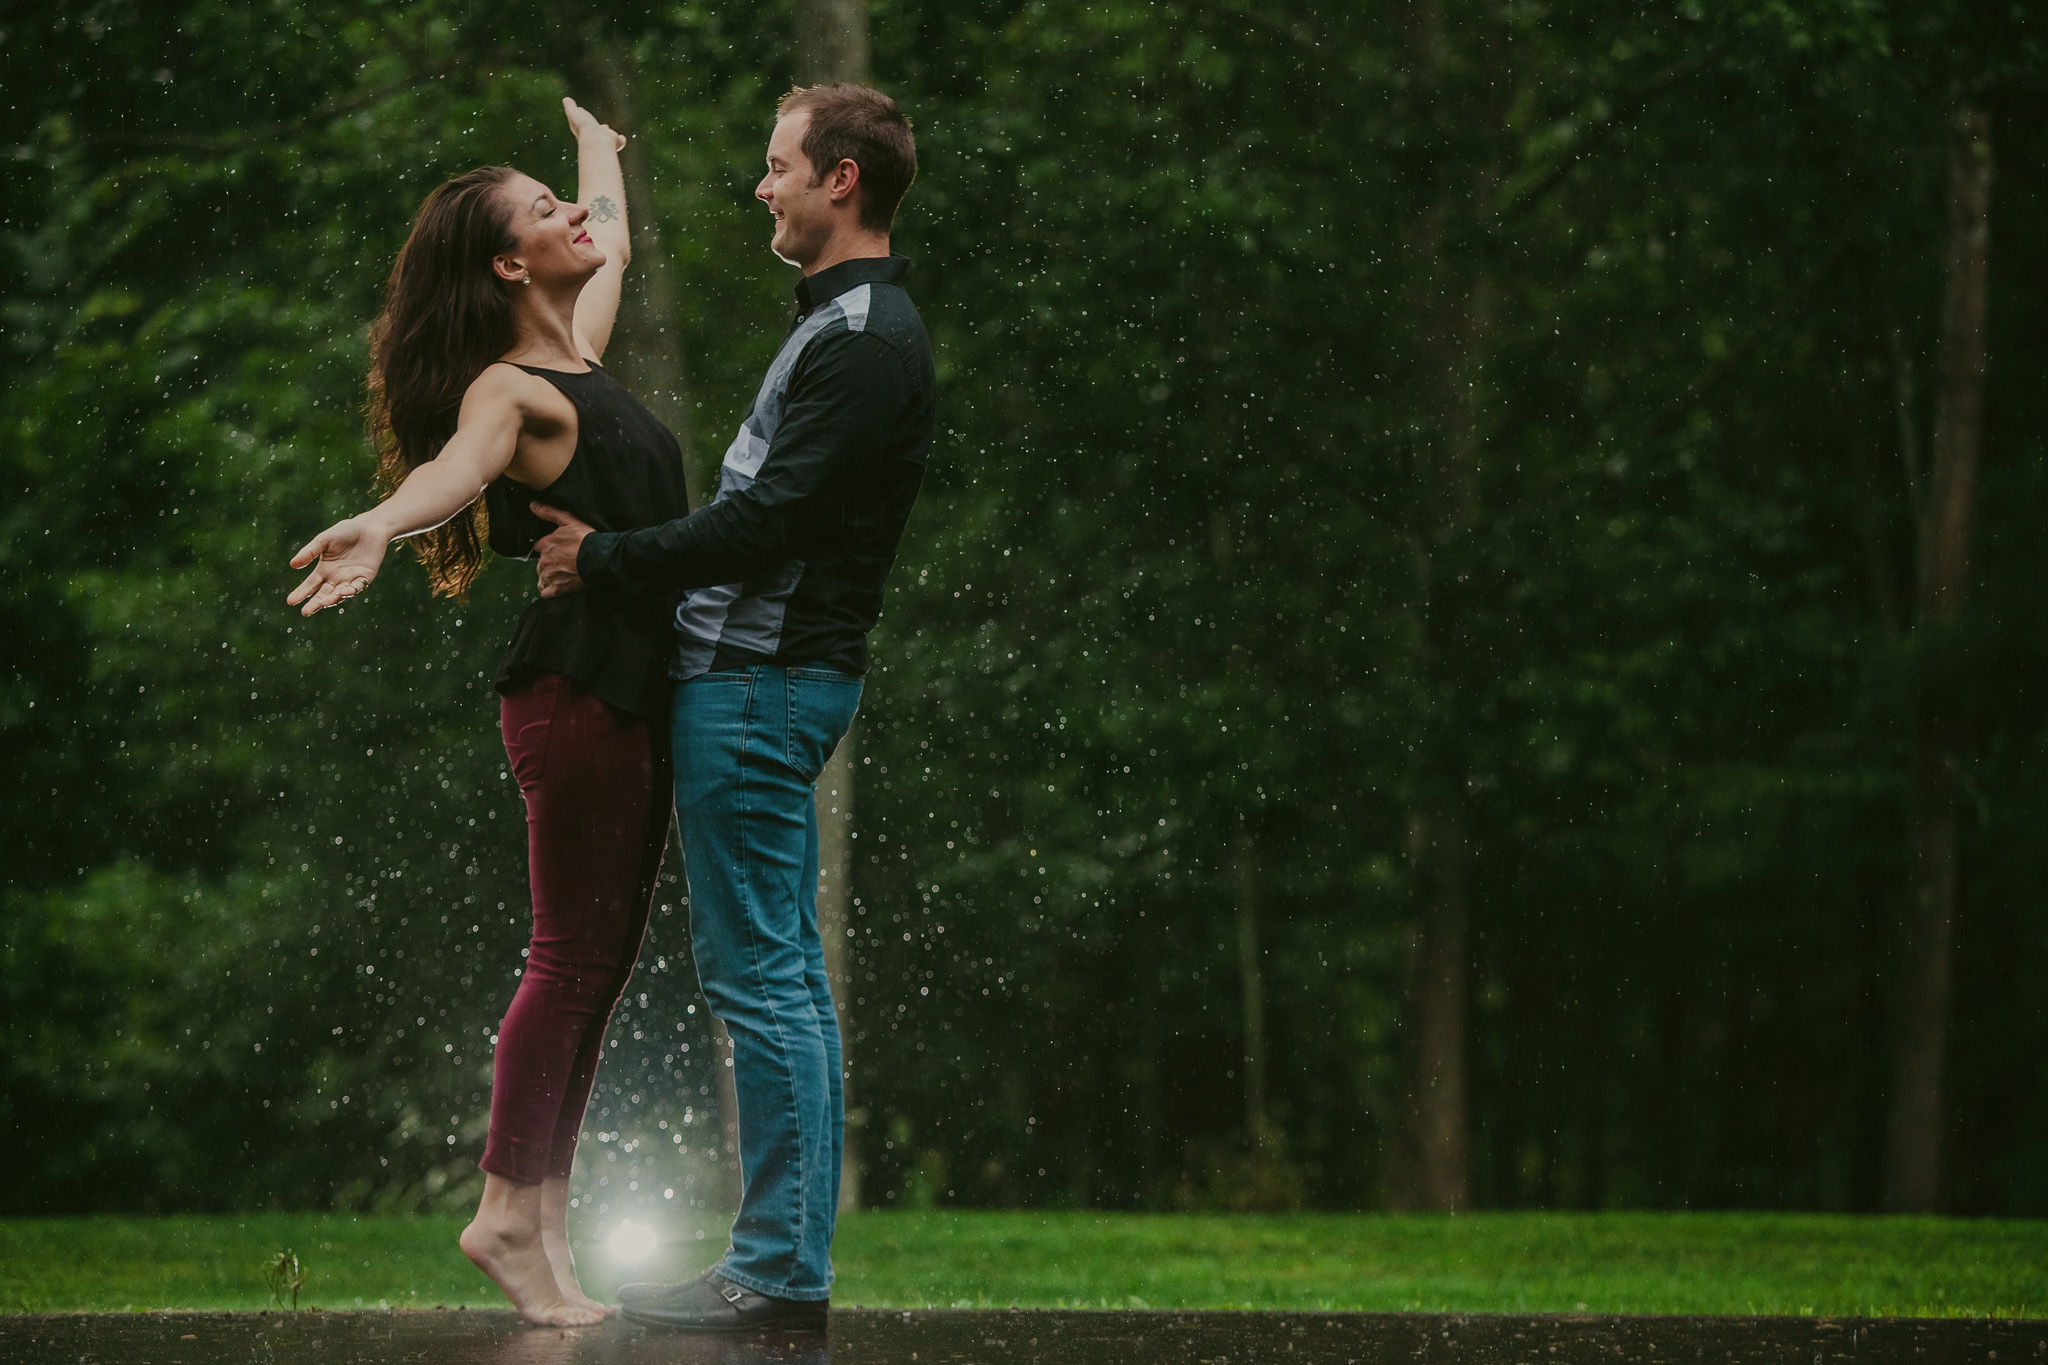 Couple dances in the rain in Charlotte, NC